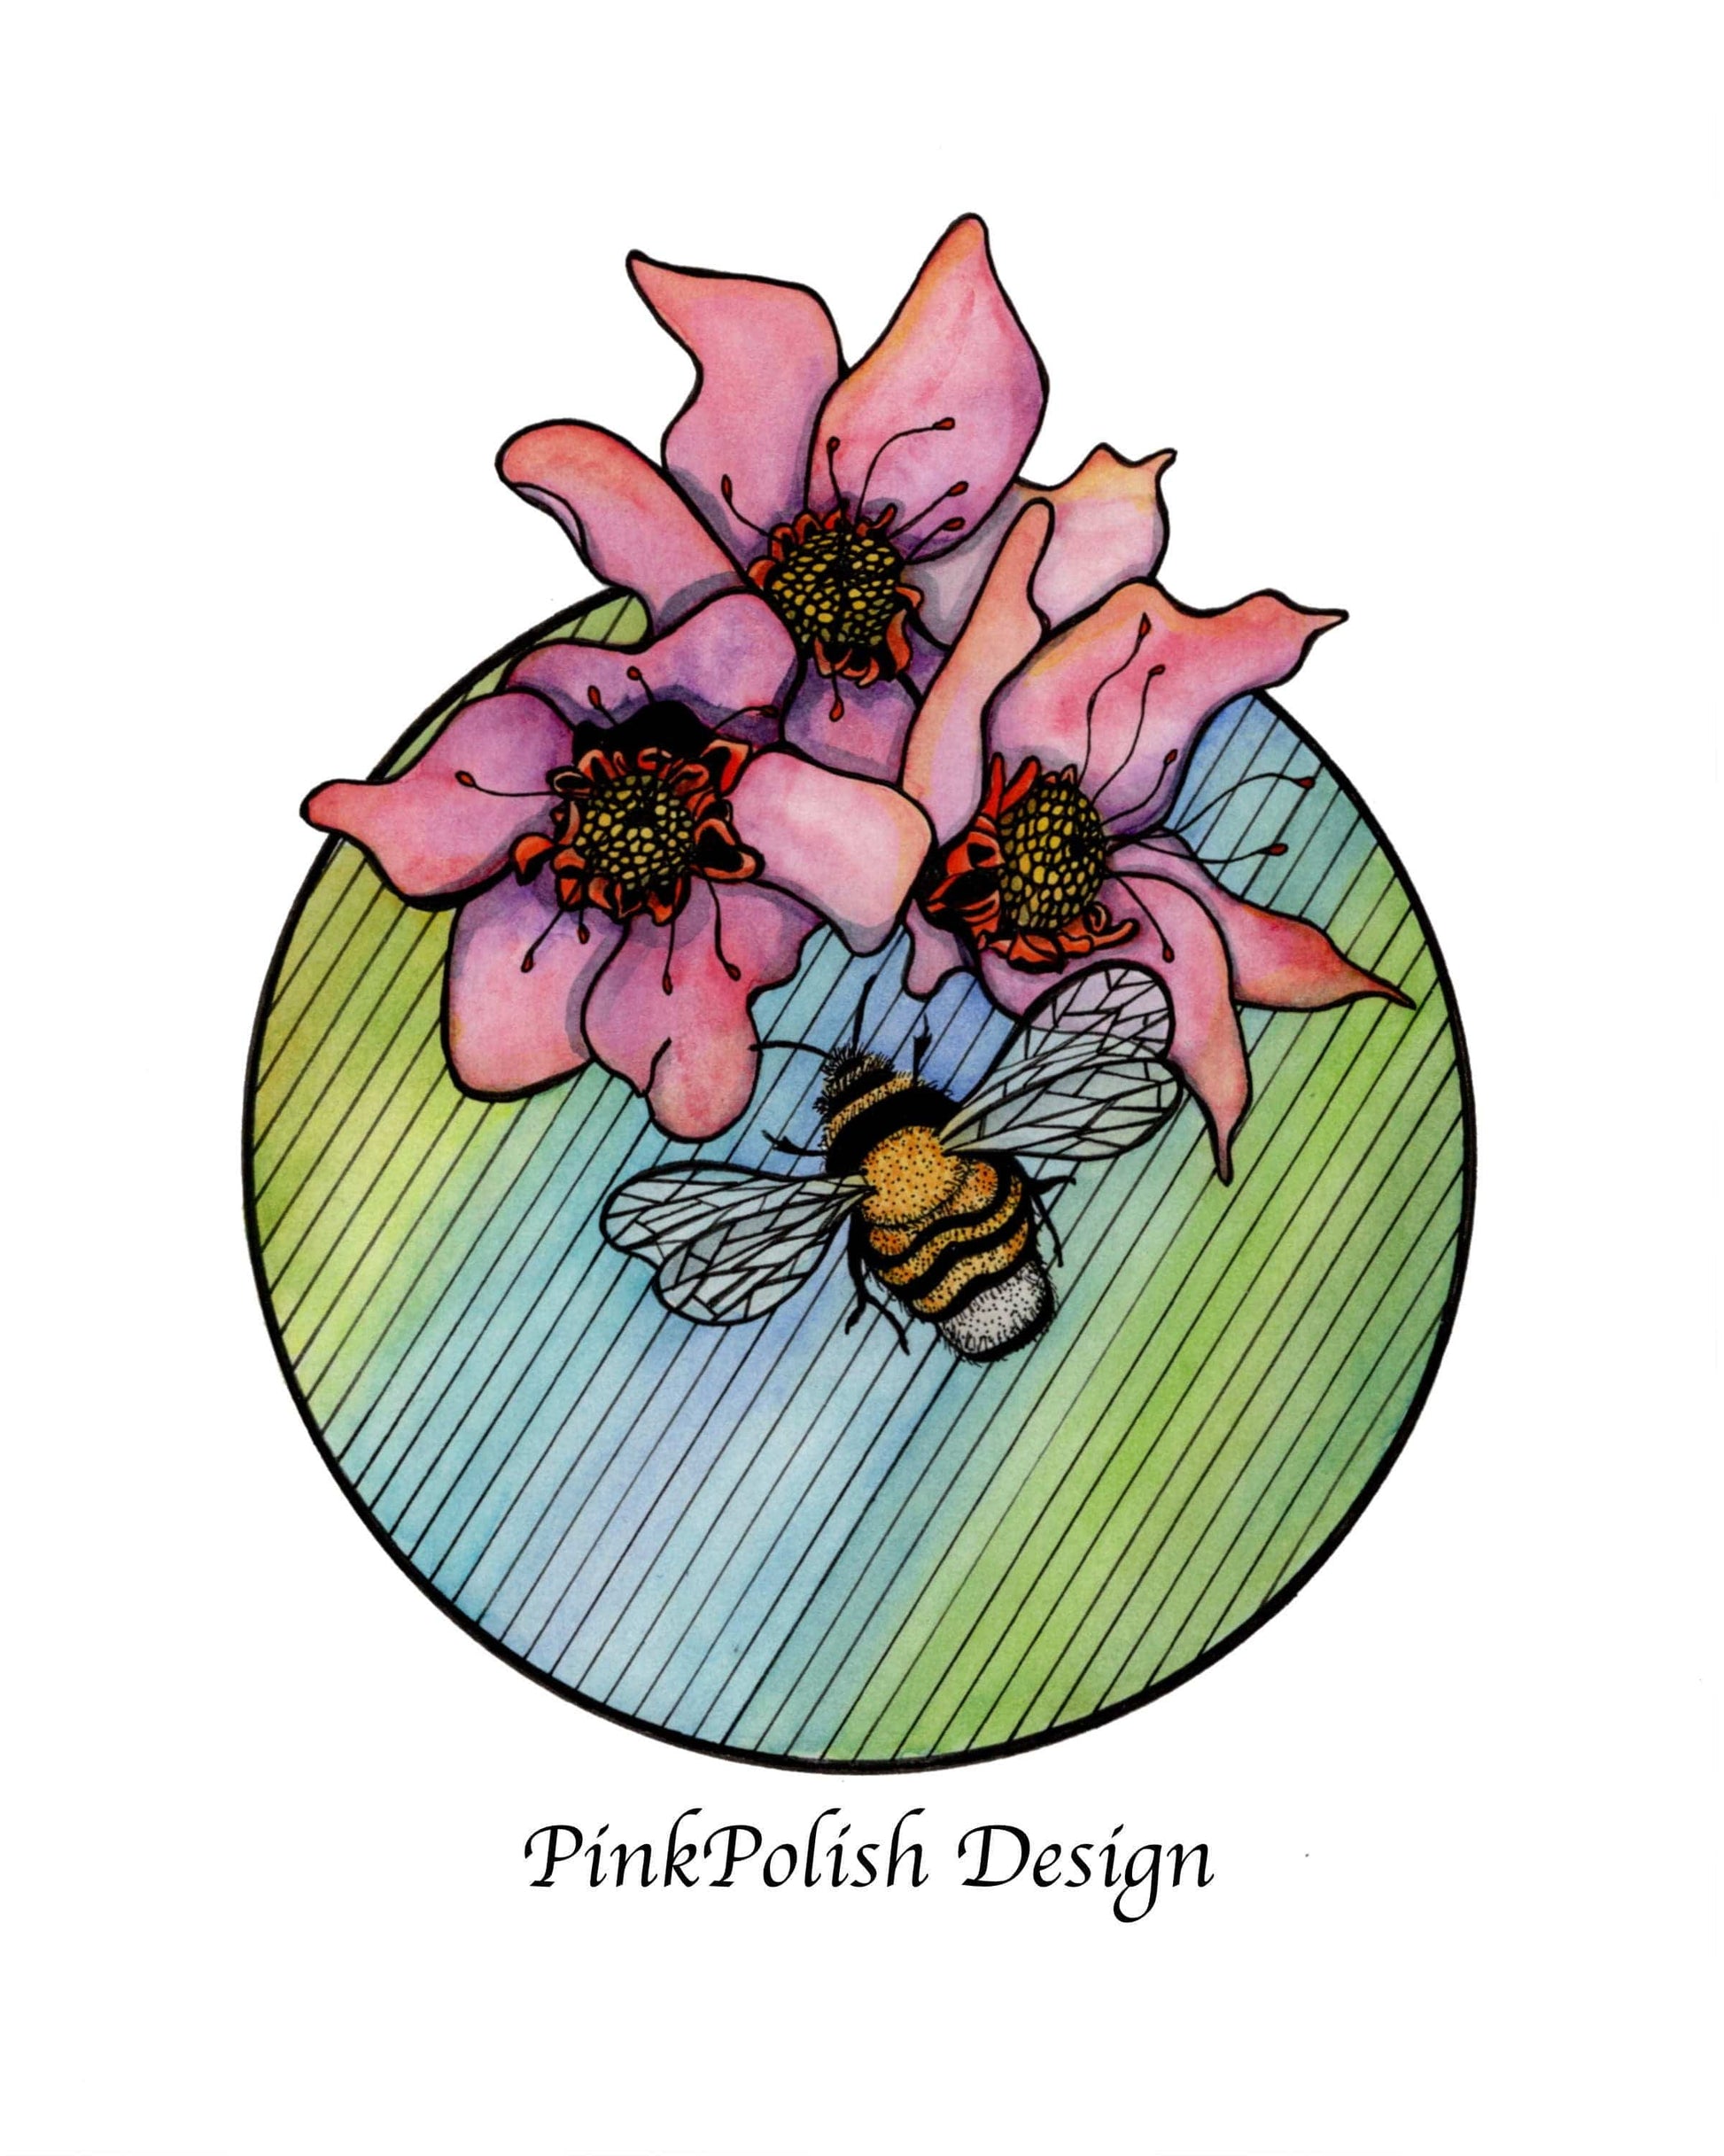 PinkPolish Design Art Prints "Bumble" Watercolor Painting: Art Print